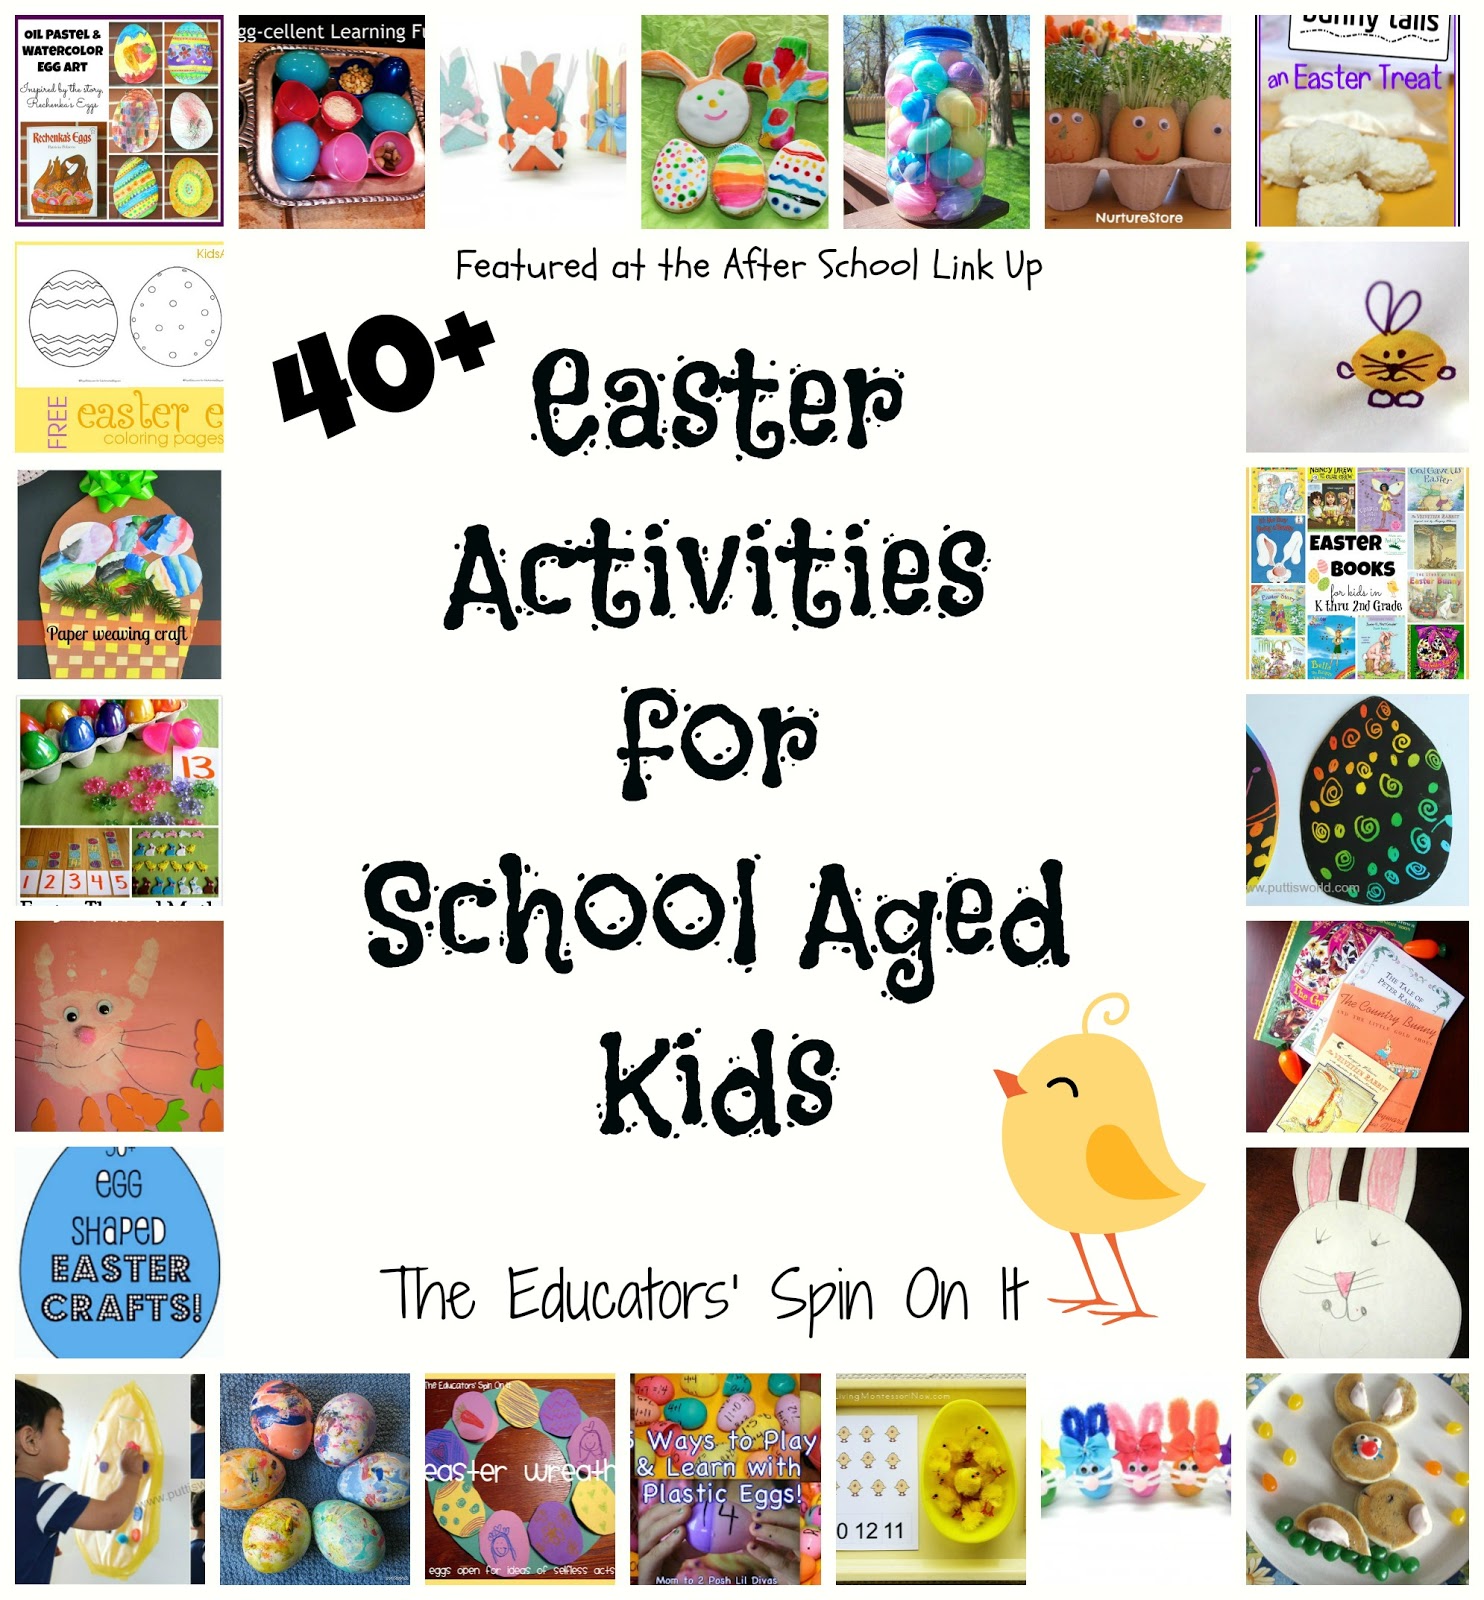 40 Easter Activities for Kids